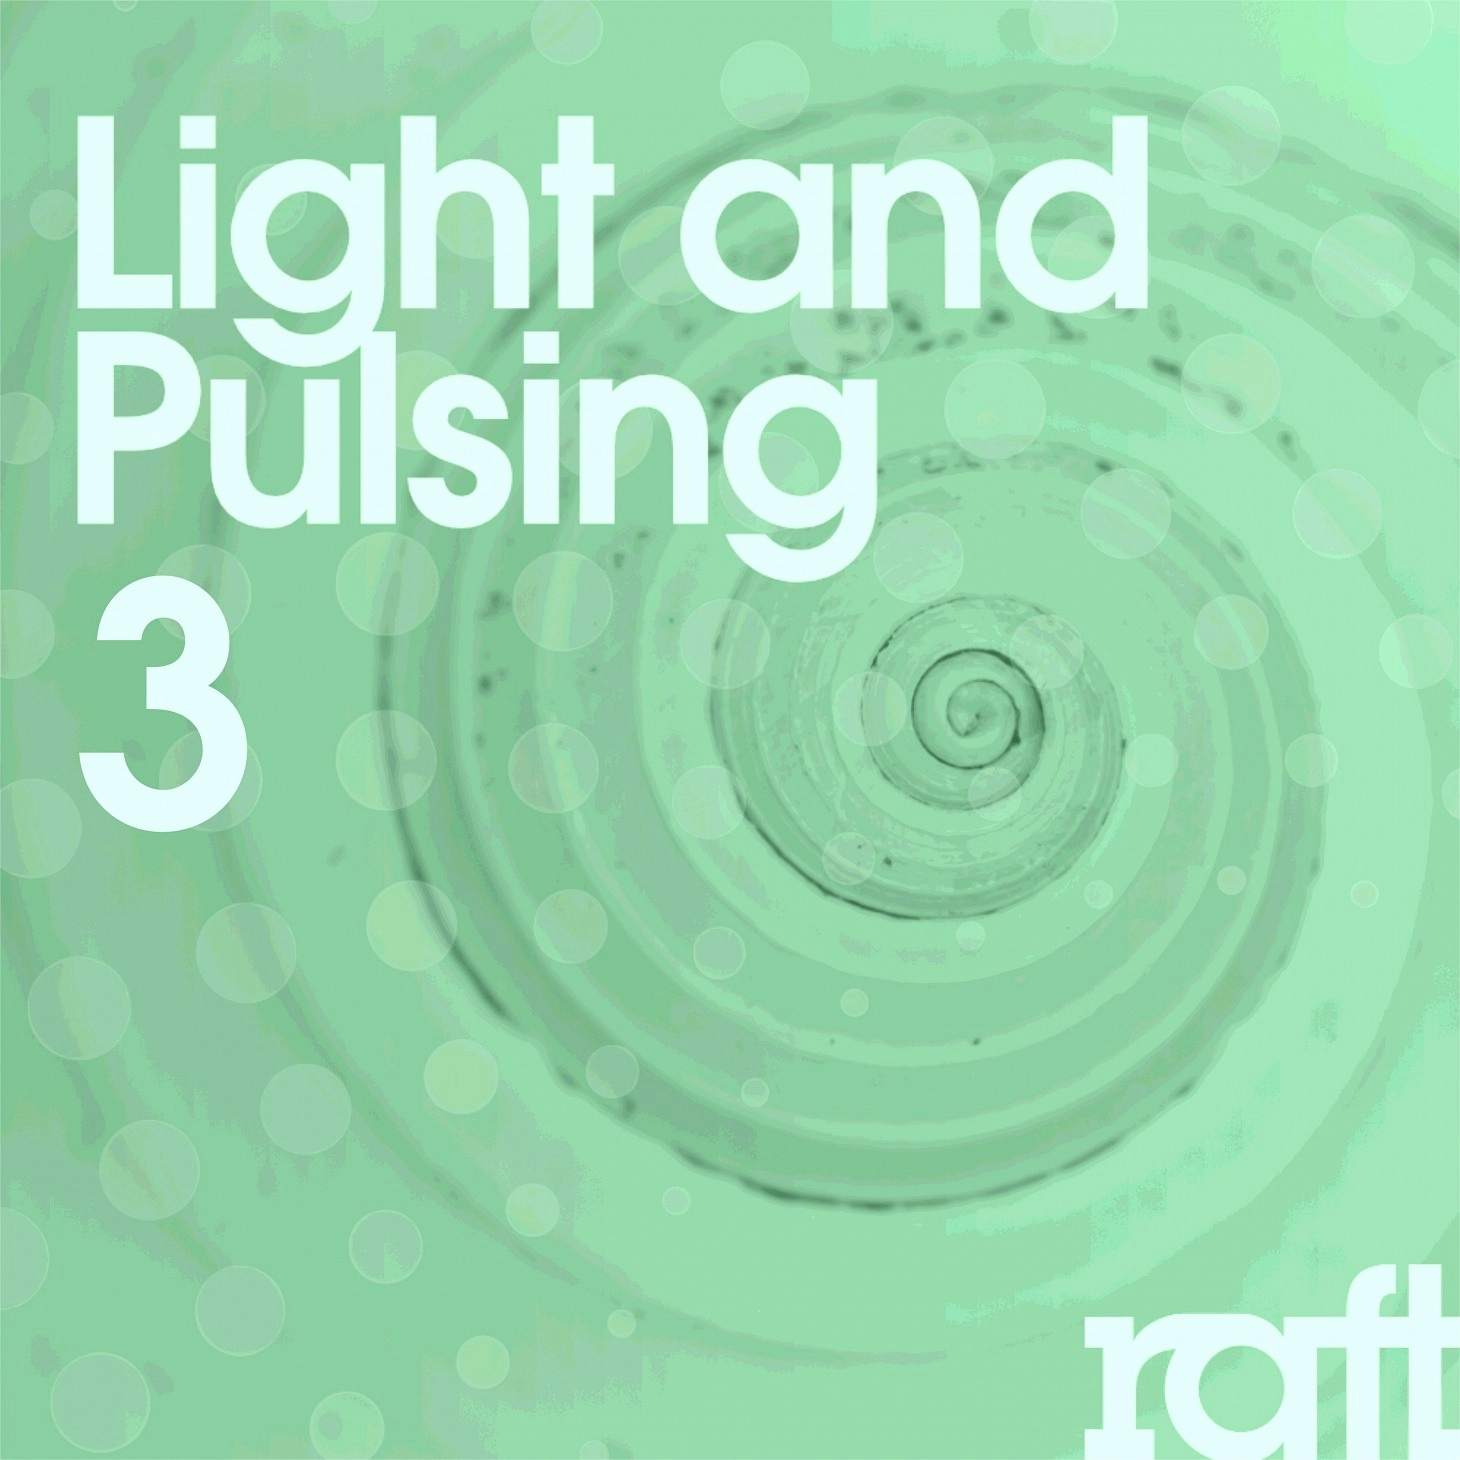 RFT101 Light and Pulsing 3